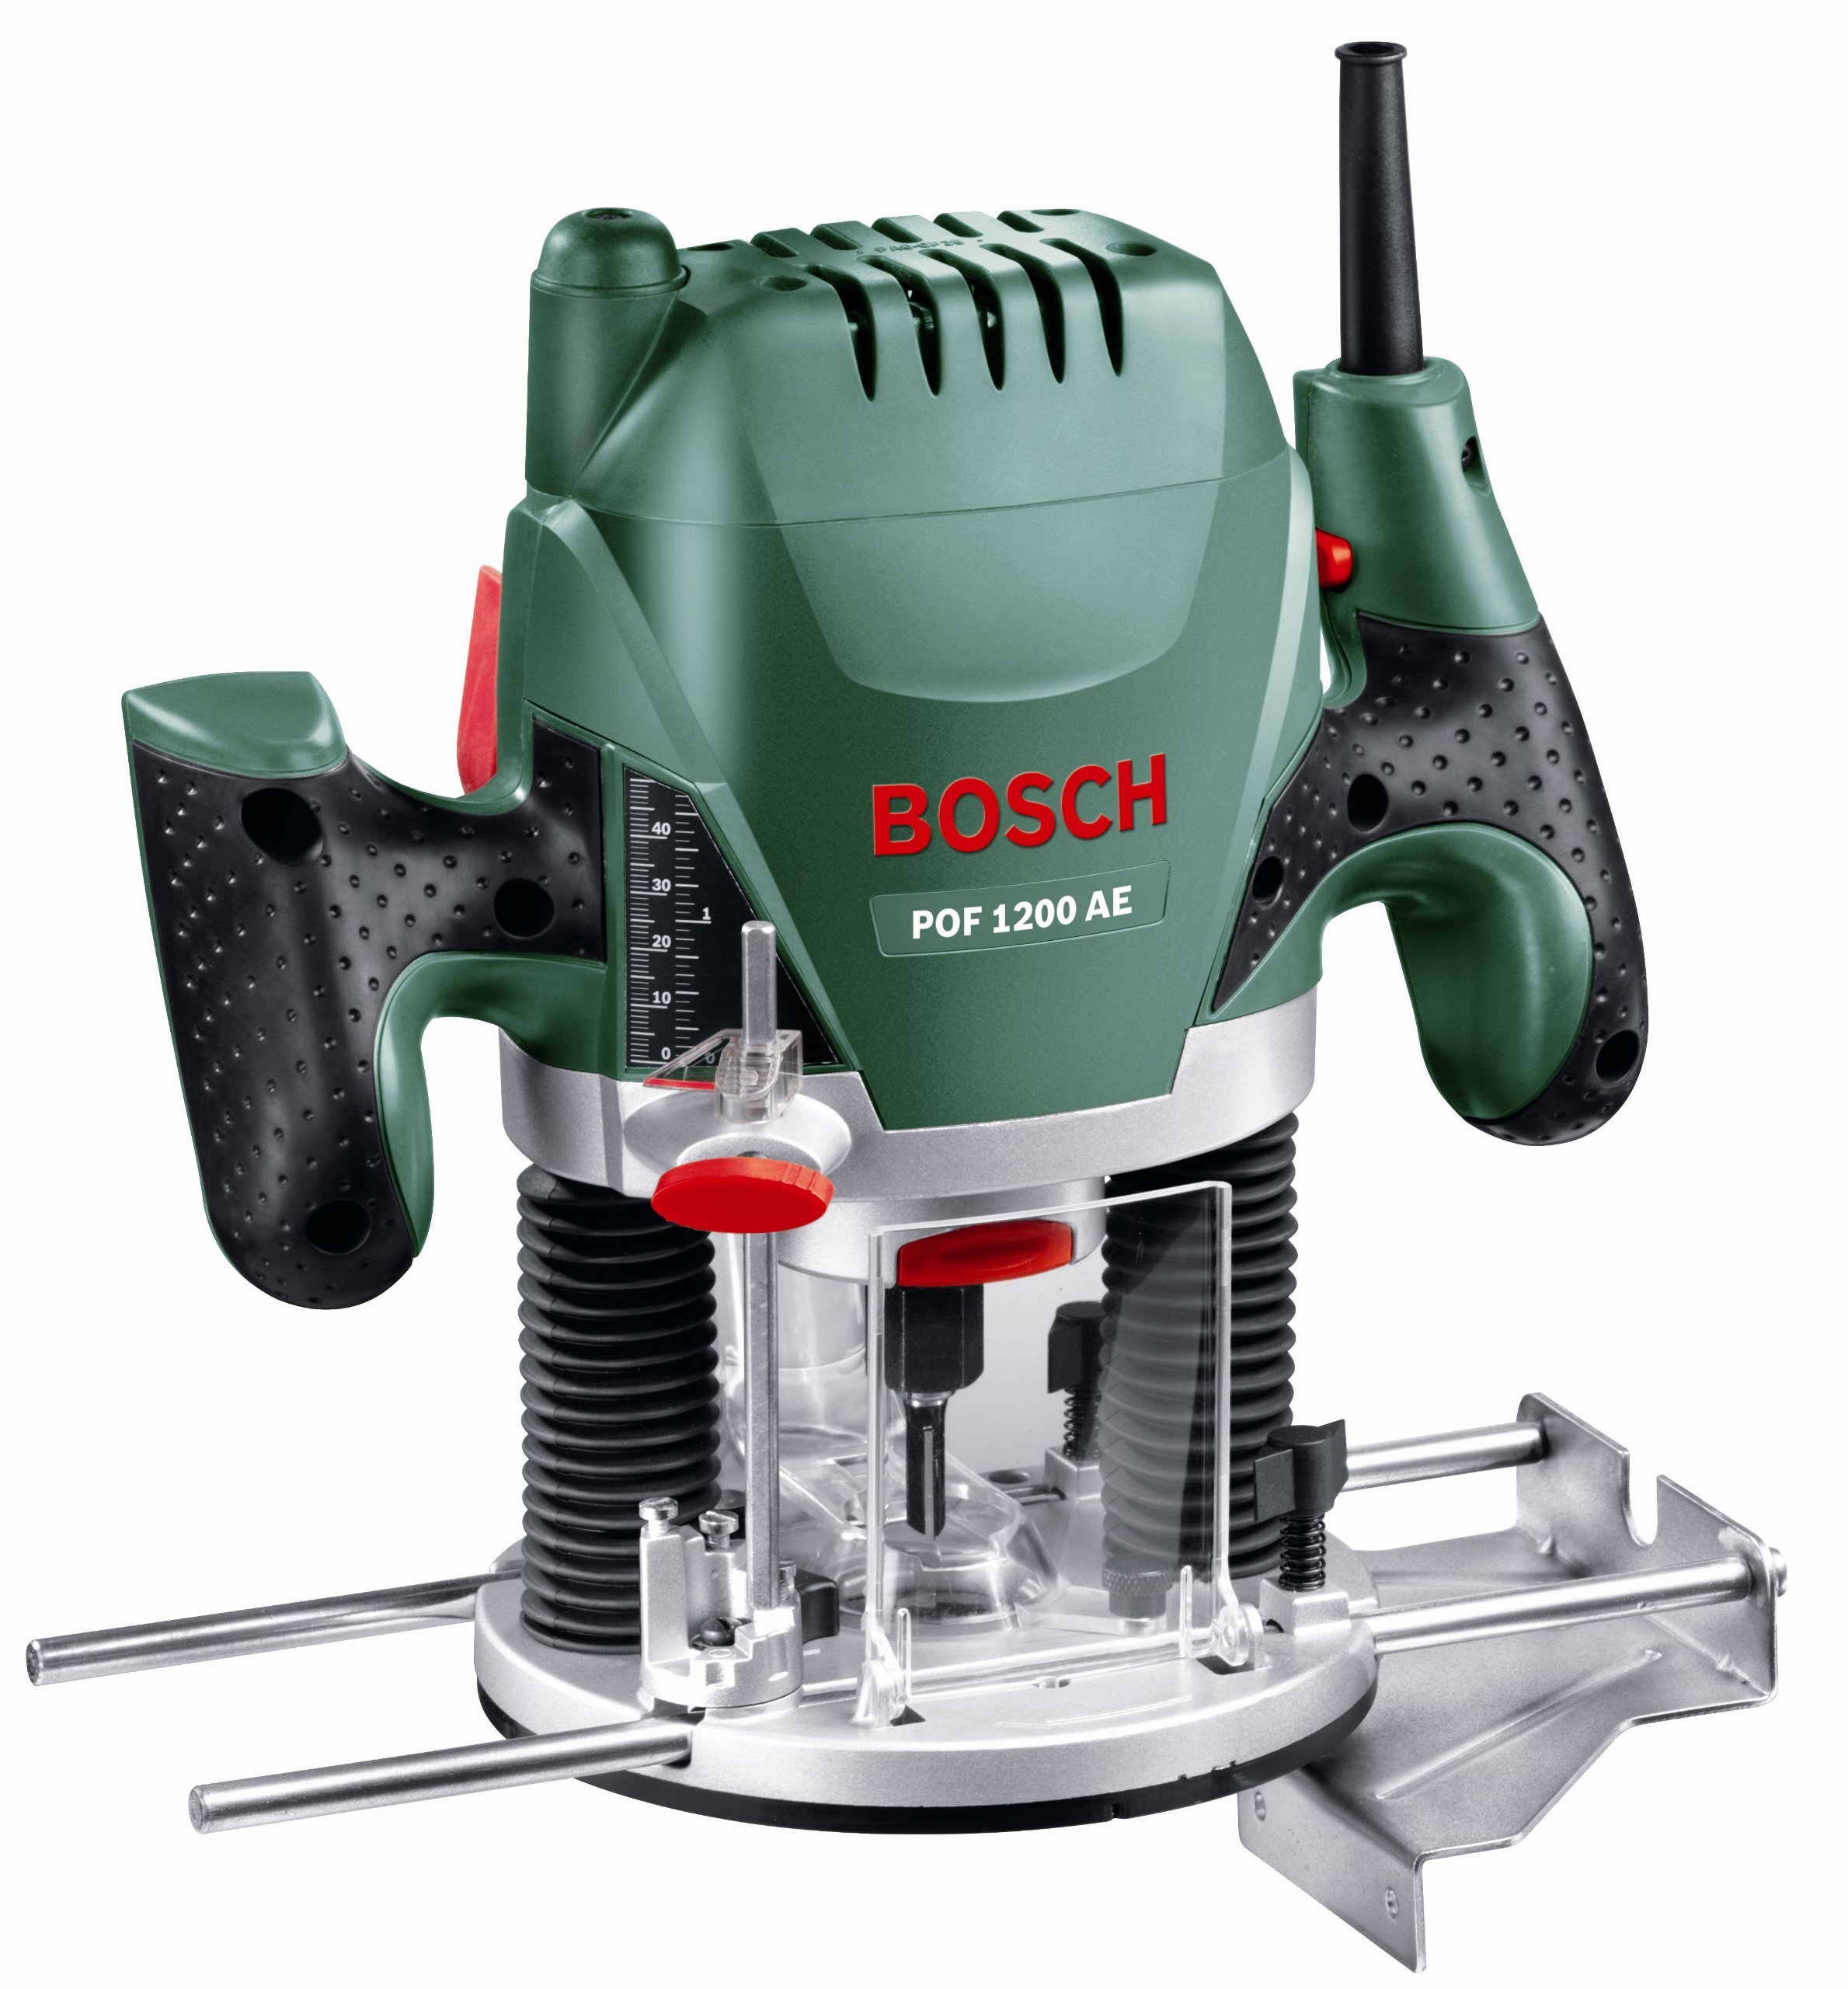 Bosch POF 1400 Ace (060326c820) 1400 Вт